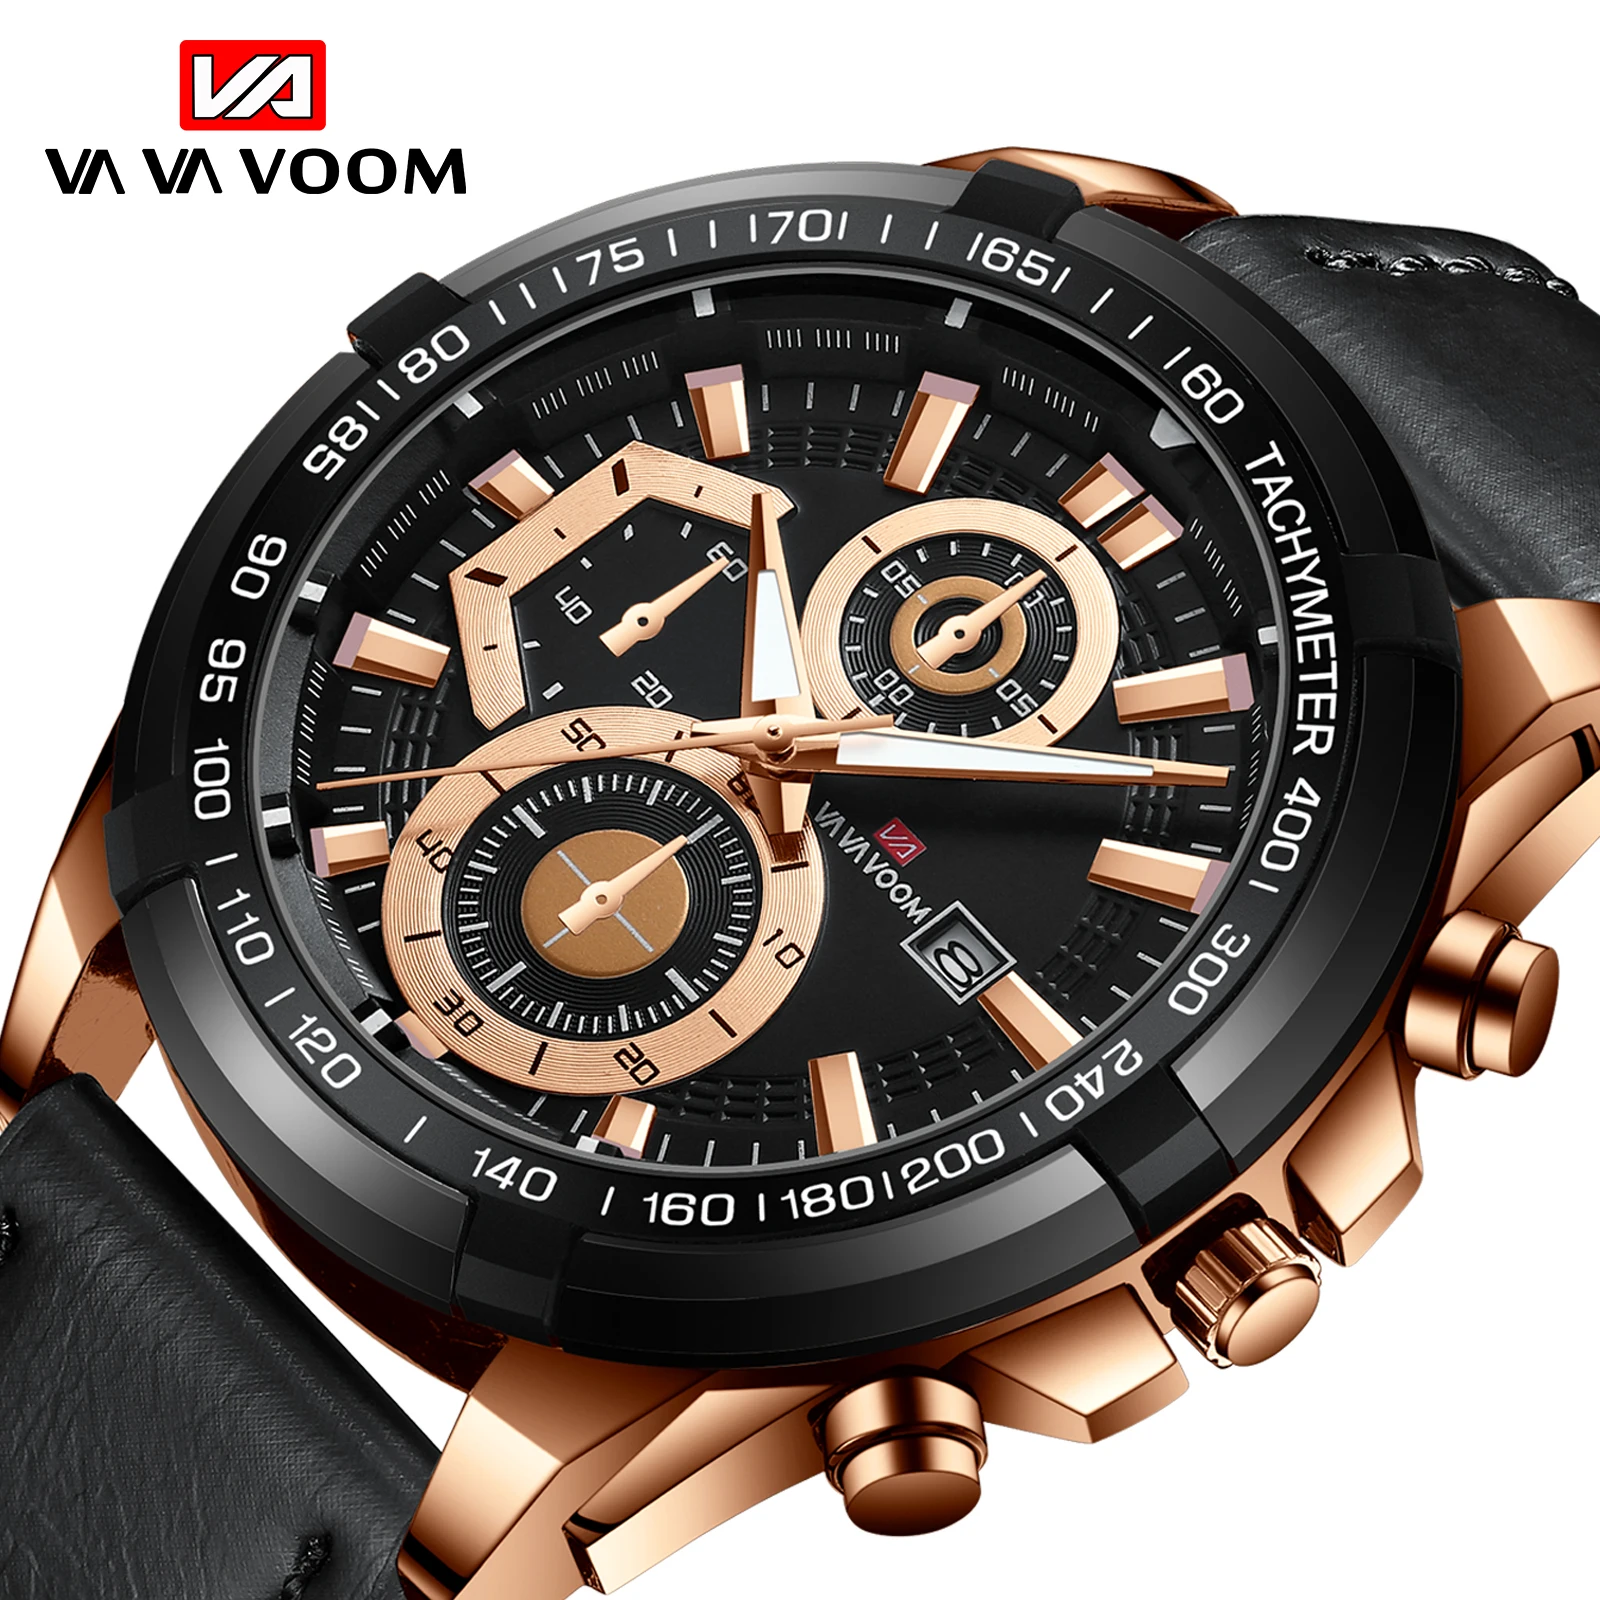 

VAVA VOOM New Men Sports Watch Fashion Rose Gold Case Black Leather Strap Calendar Waterproof Quartz Watch Relogio Masculino